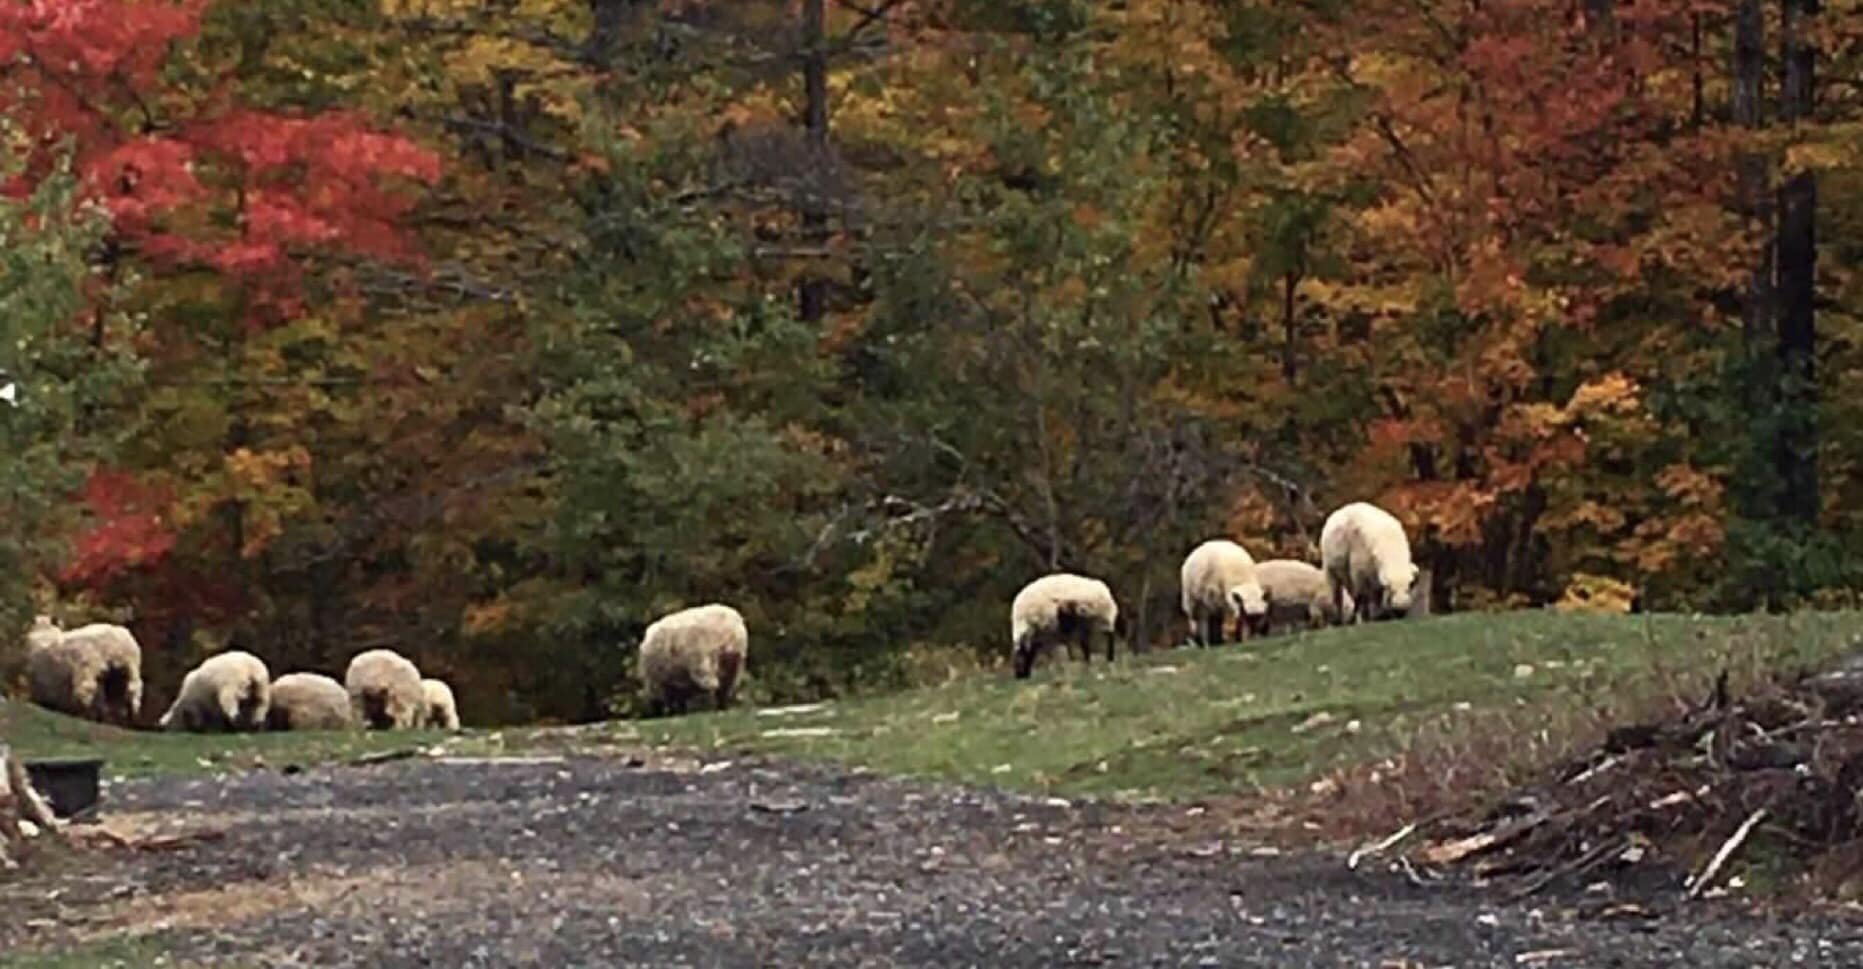 Sheep on Thurman Fall Farm Tour.jpeg